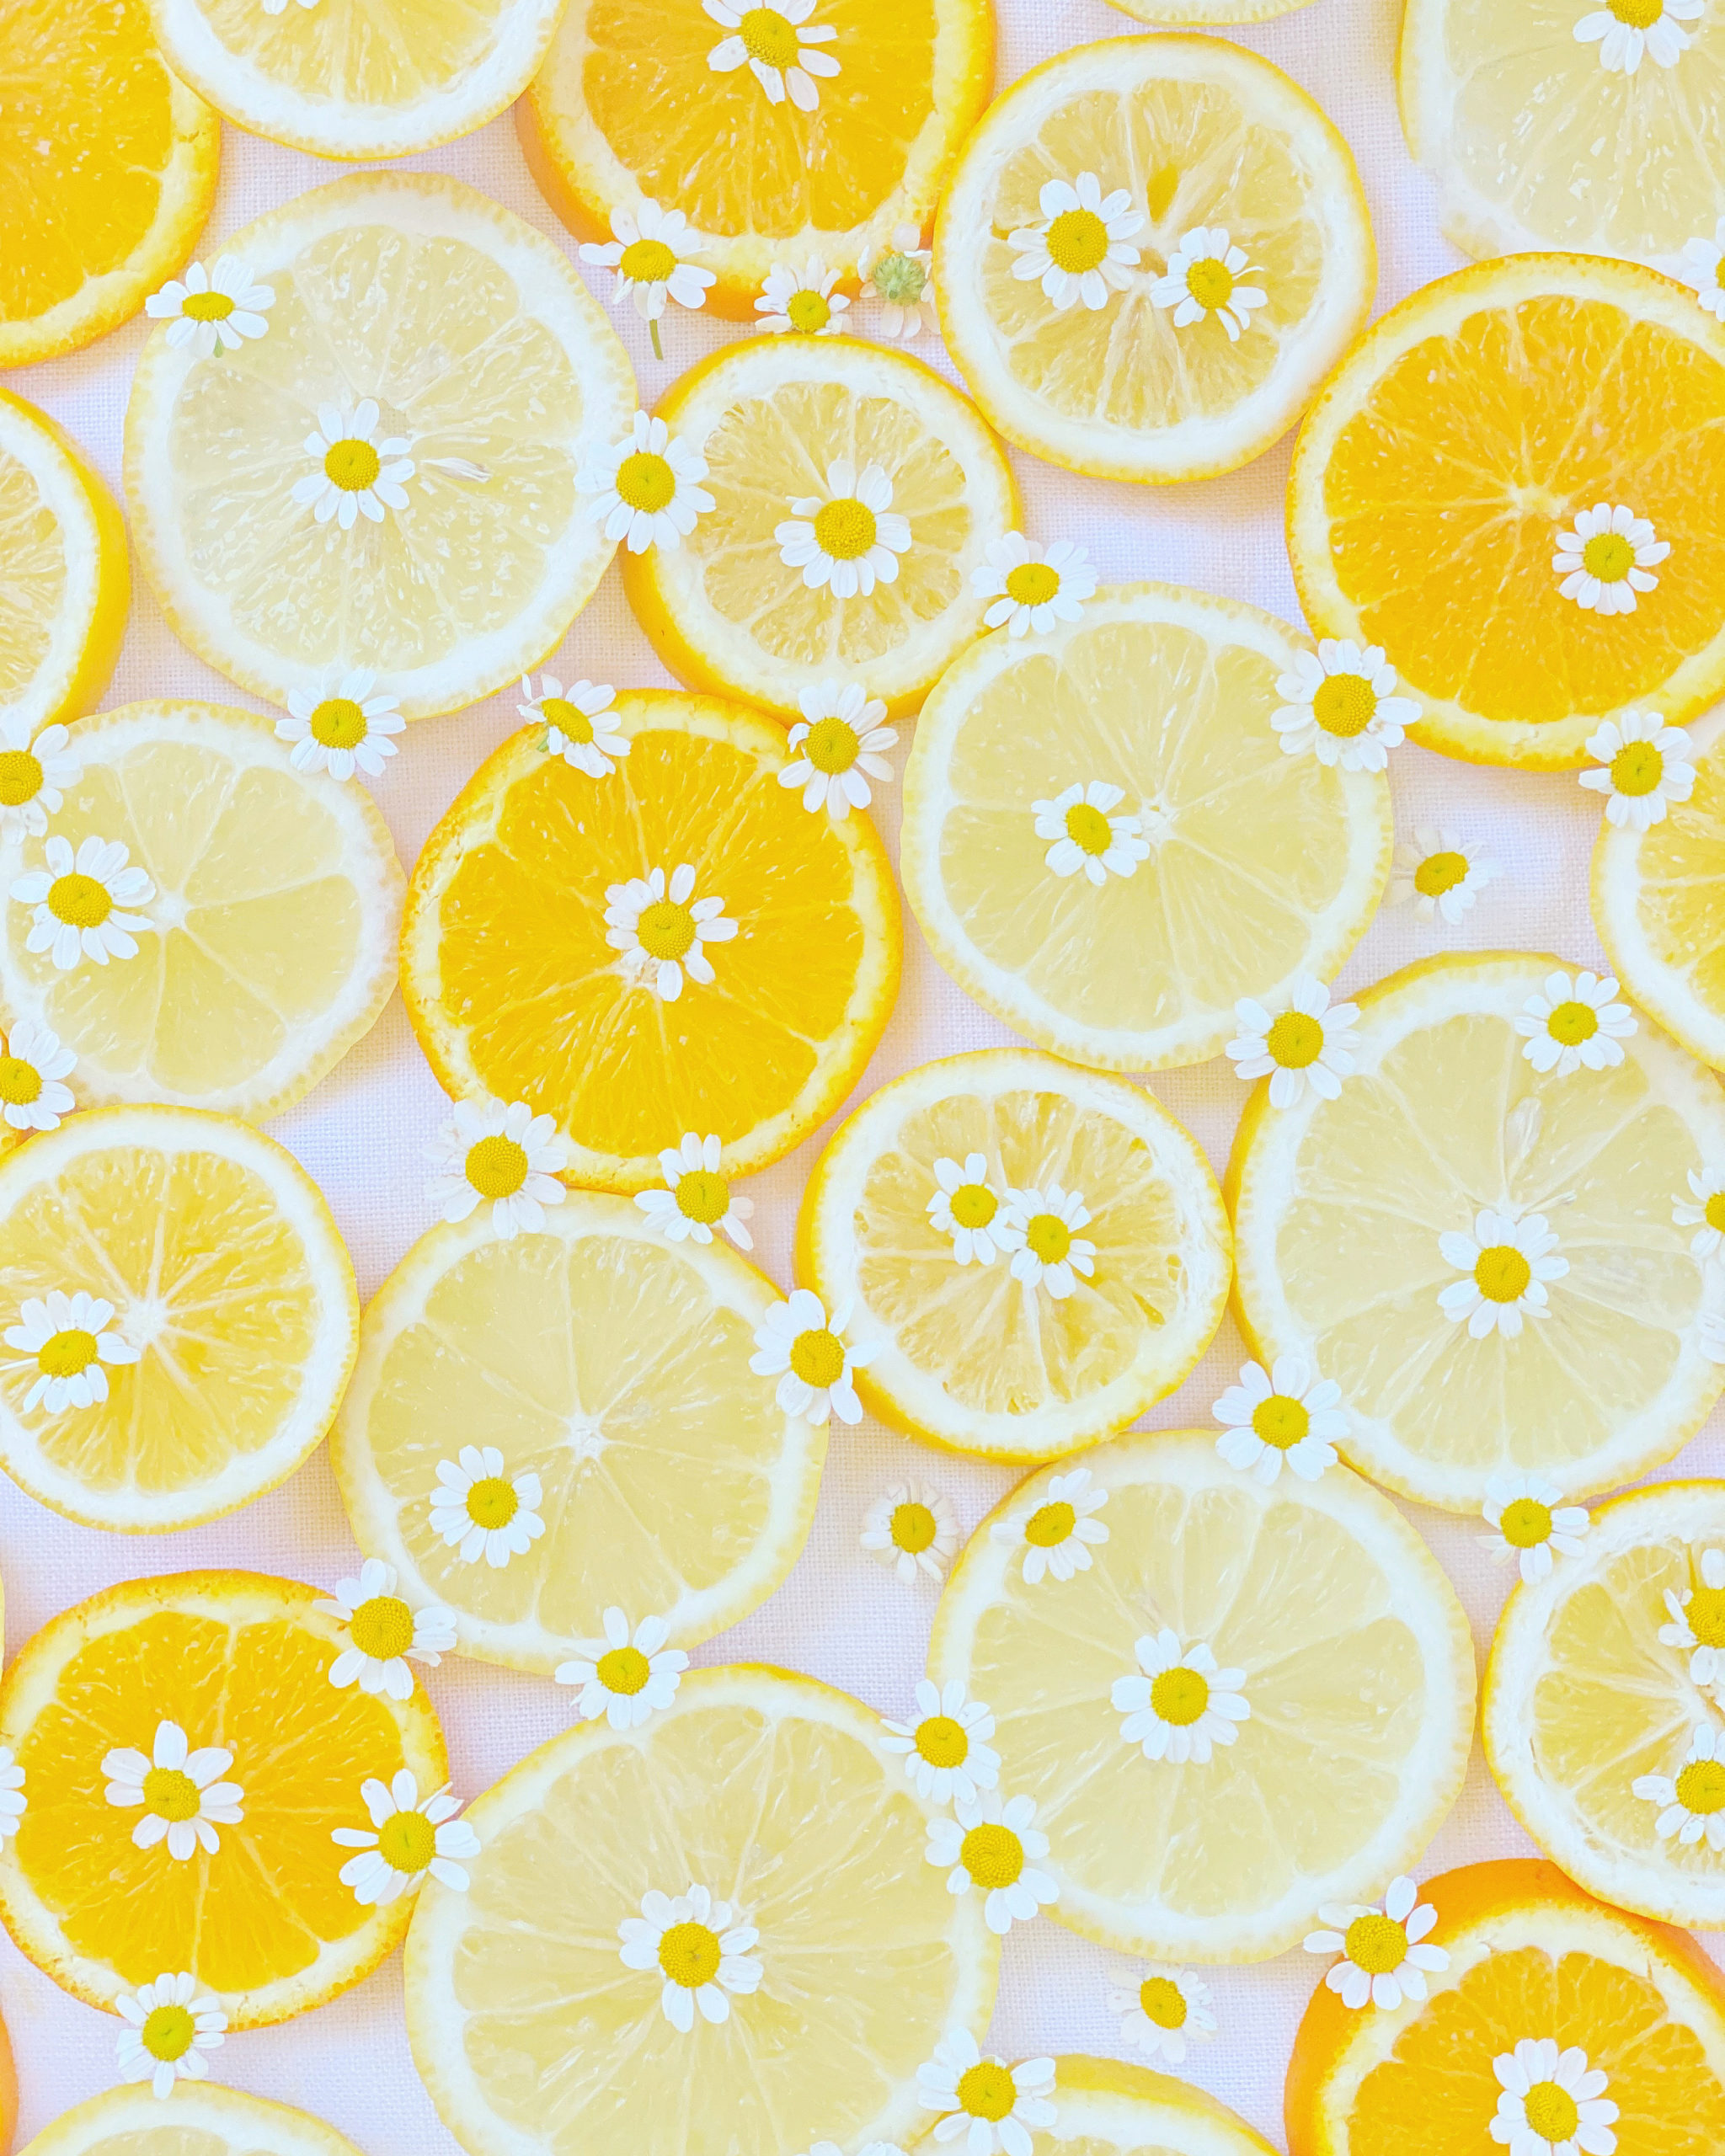 lemon drop cocktail recipe